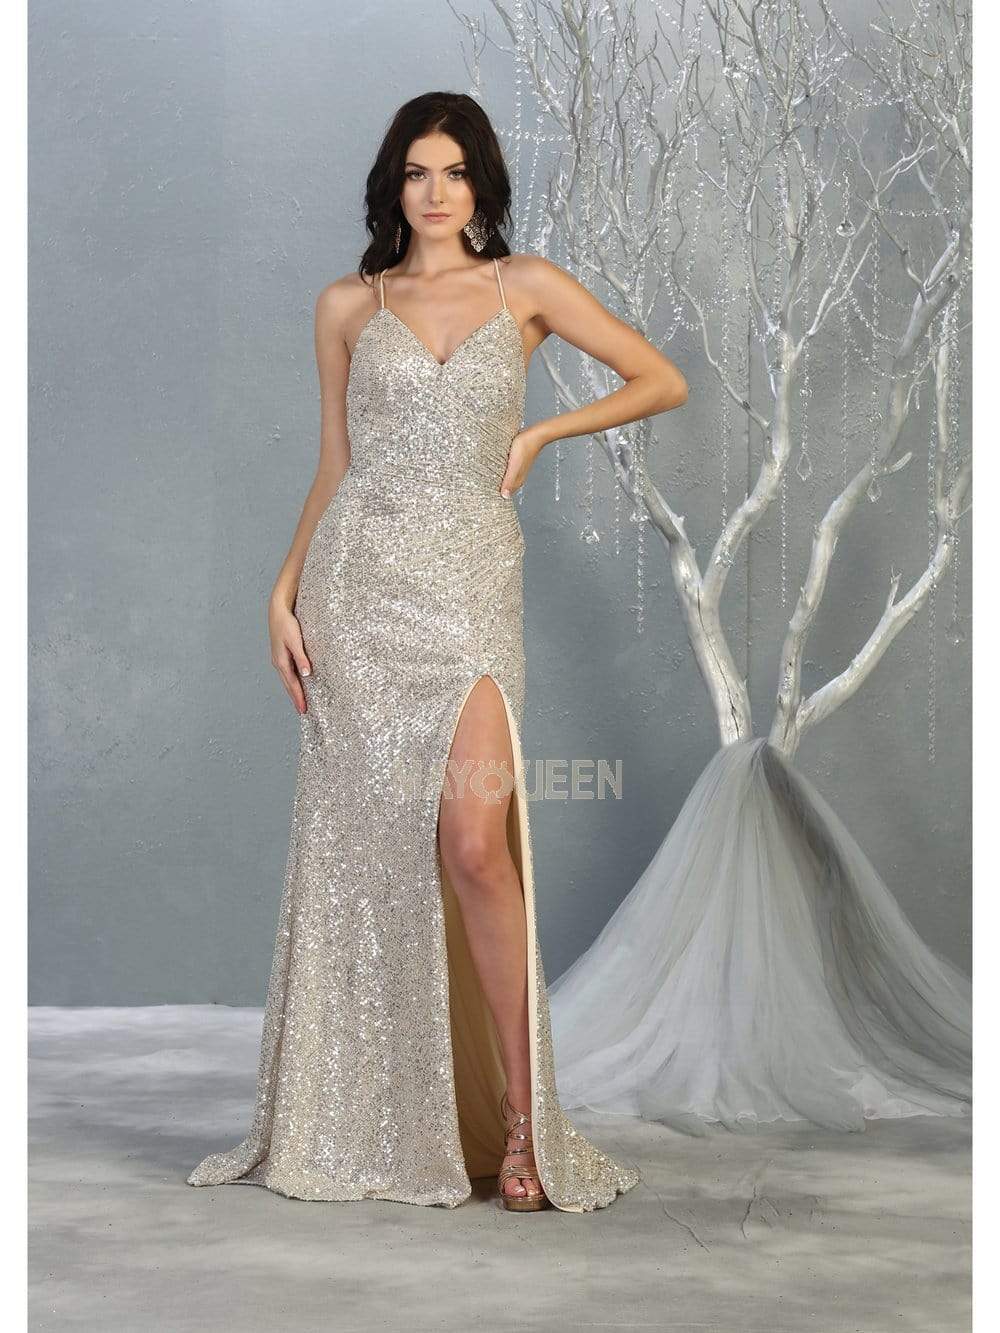 May Queen - RQ7852 Sequin Embellished Deep V-Neck Dress with Slit Evening Dresses 2 / Champagne